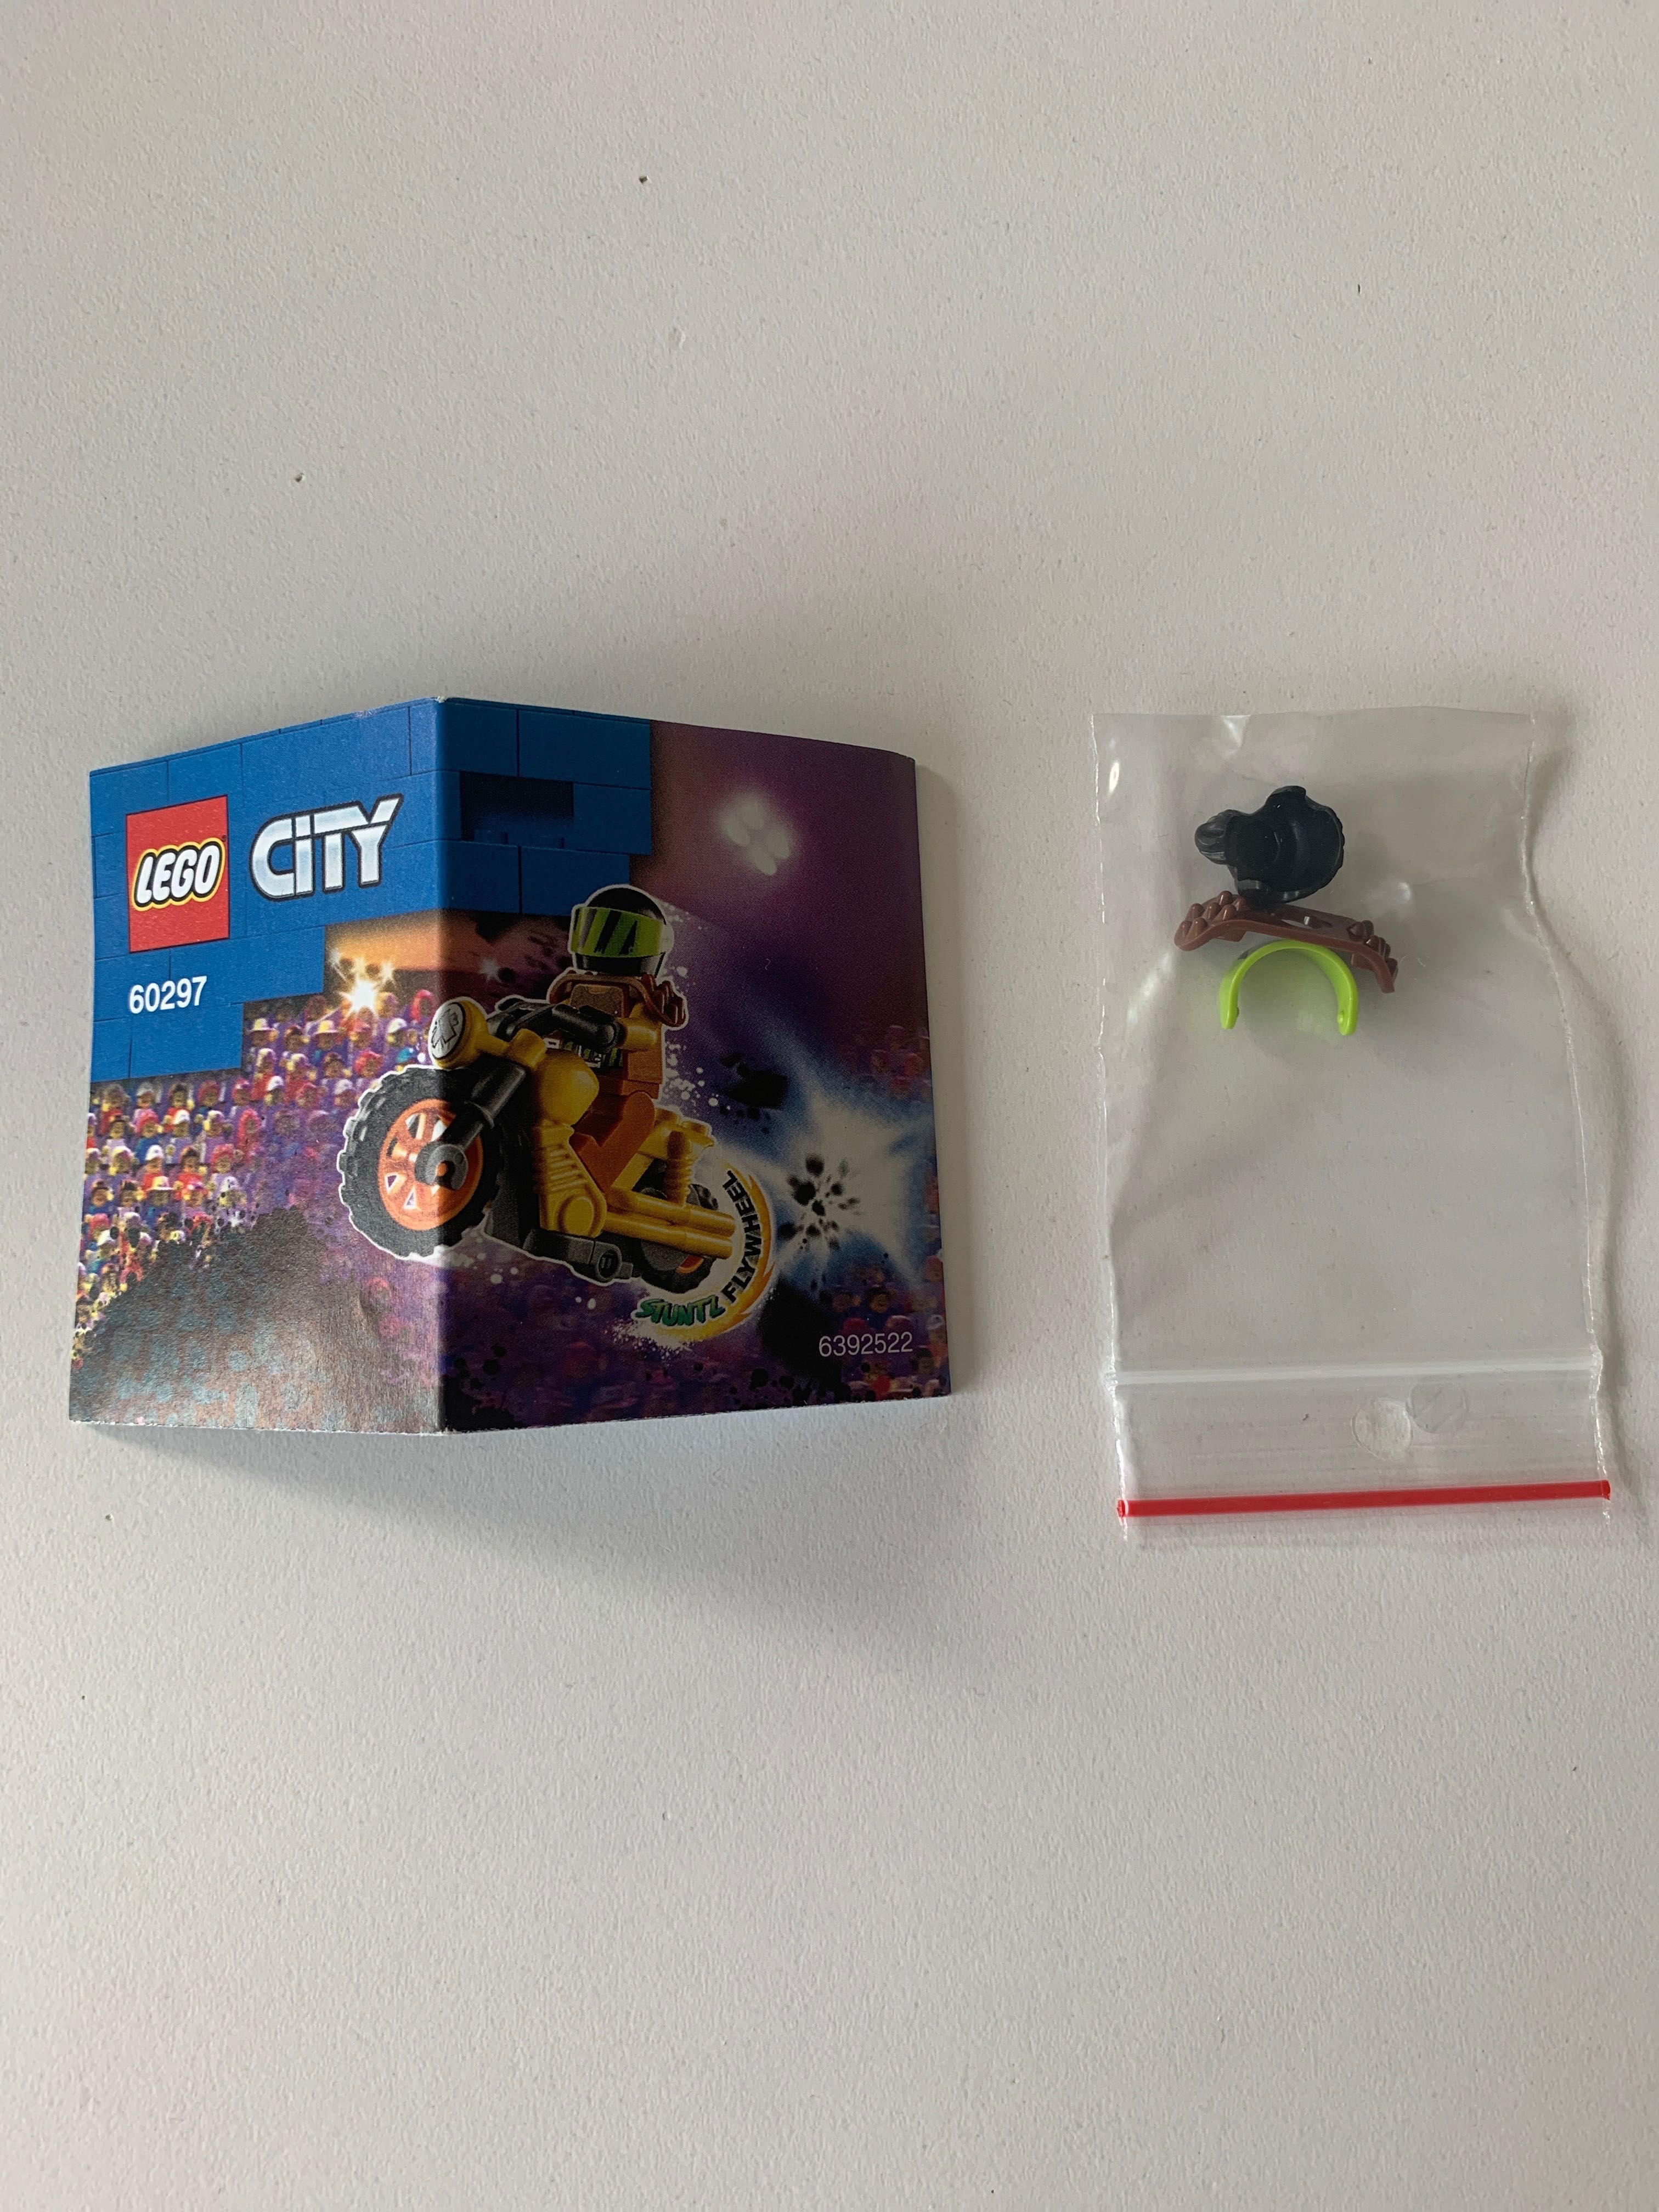 LEGO City 60297 Stuntz motor